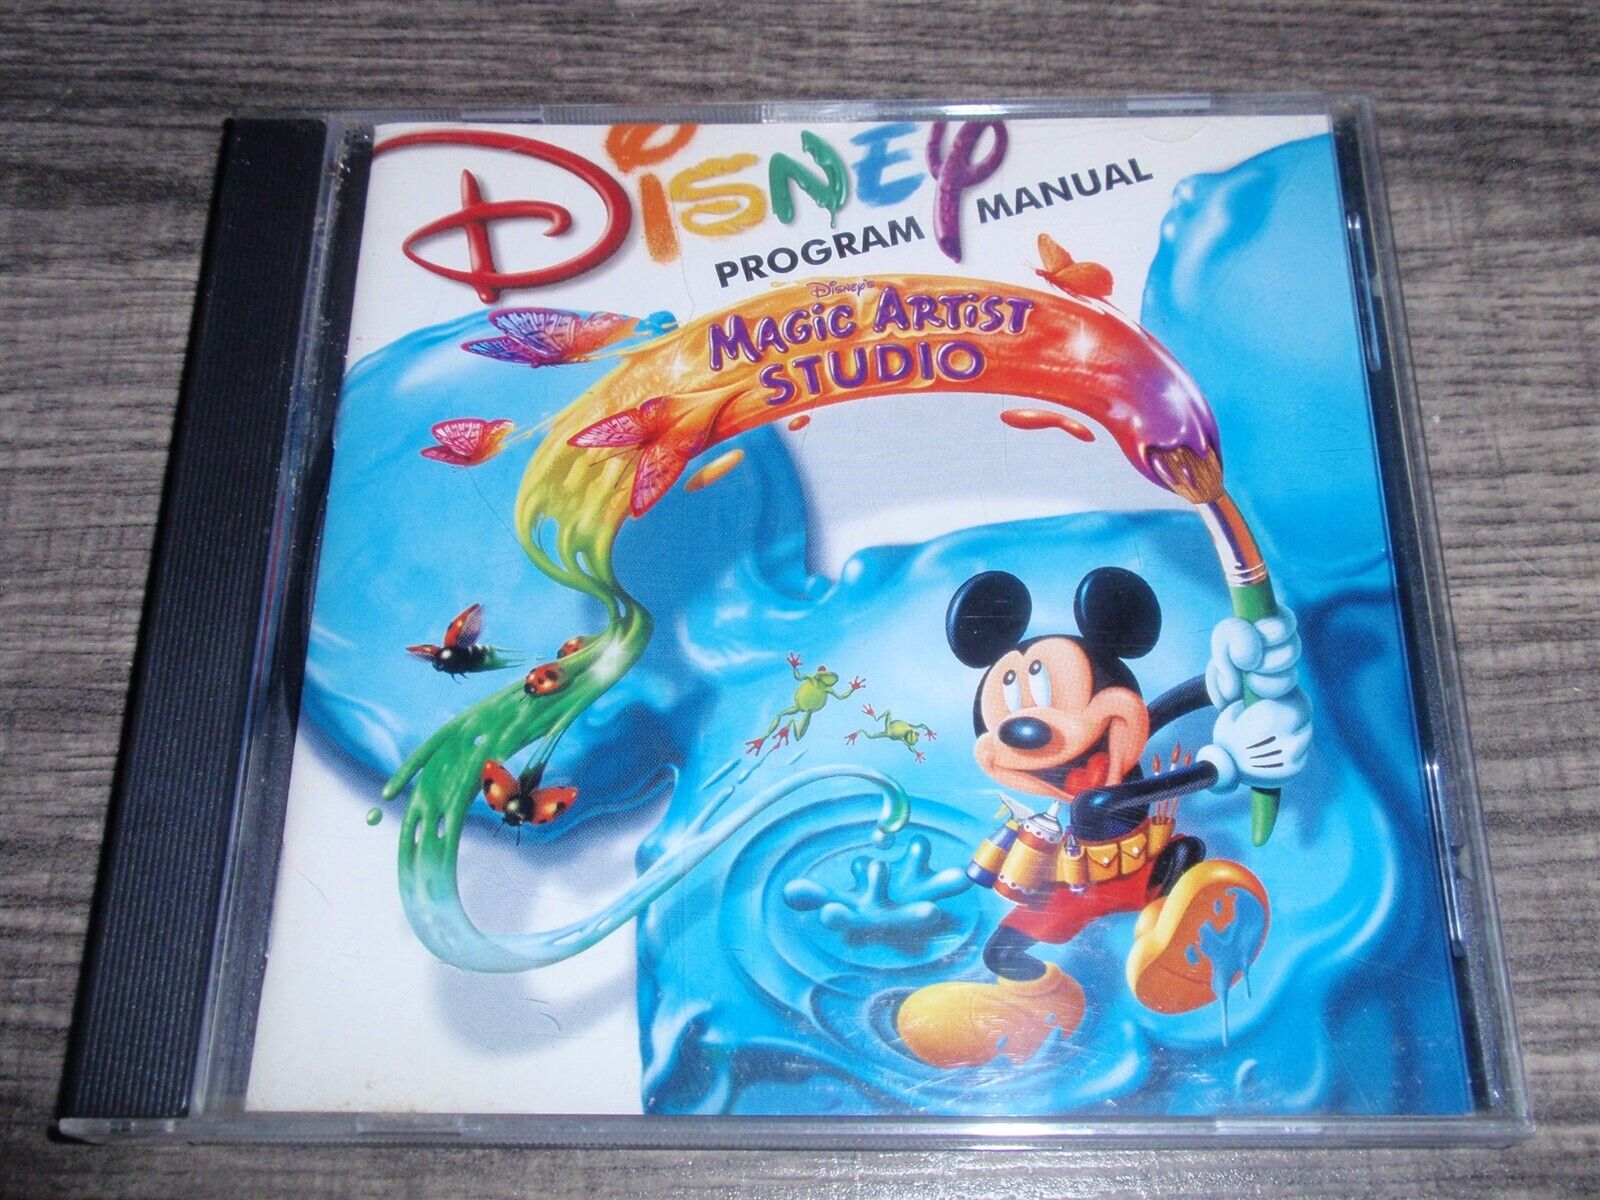 Disney's Magic Artist Studio PC/Mac CD-ROM 1999 software for Windows 95/98 Apple